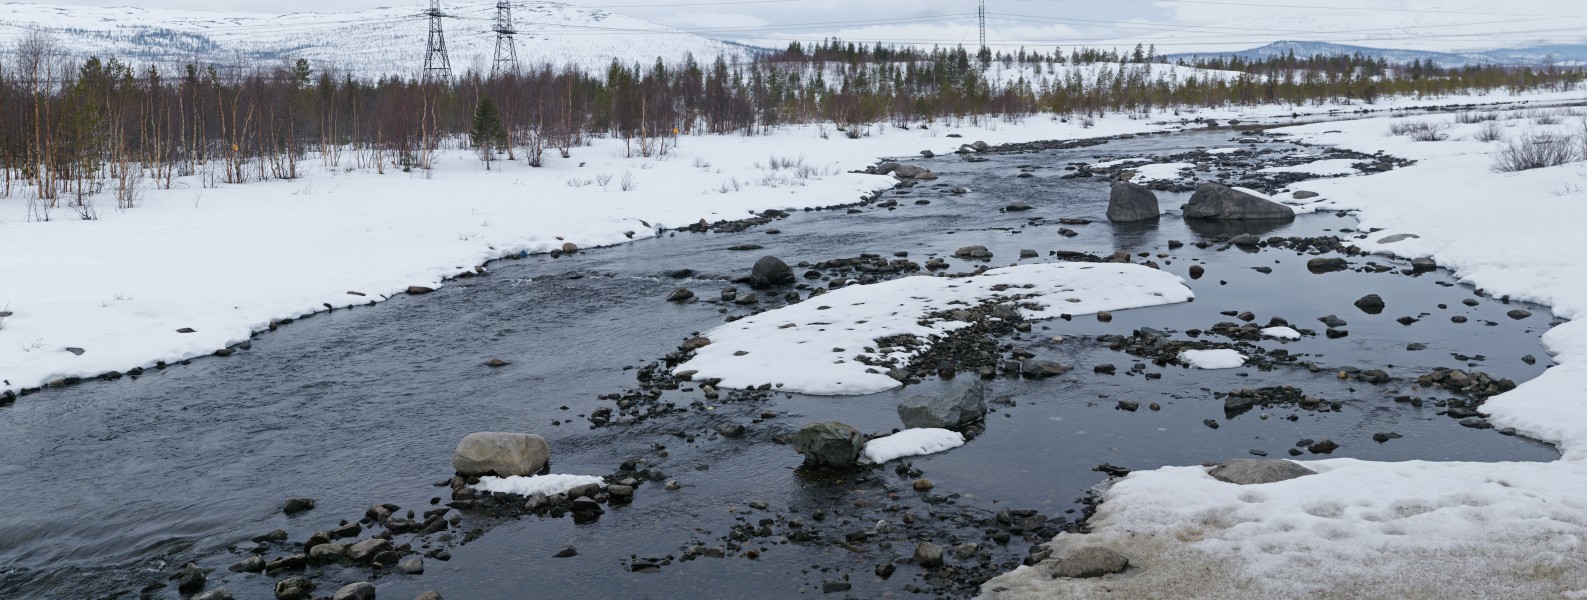 River in Russia 3